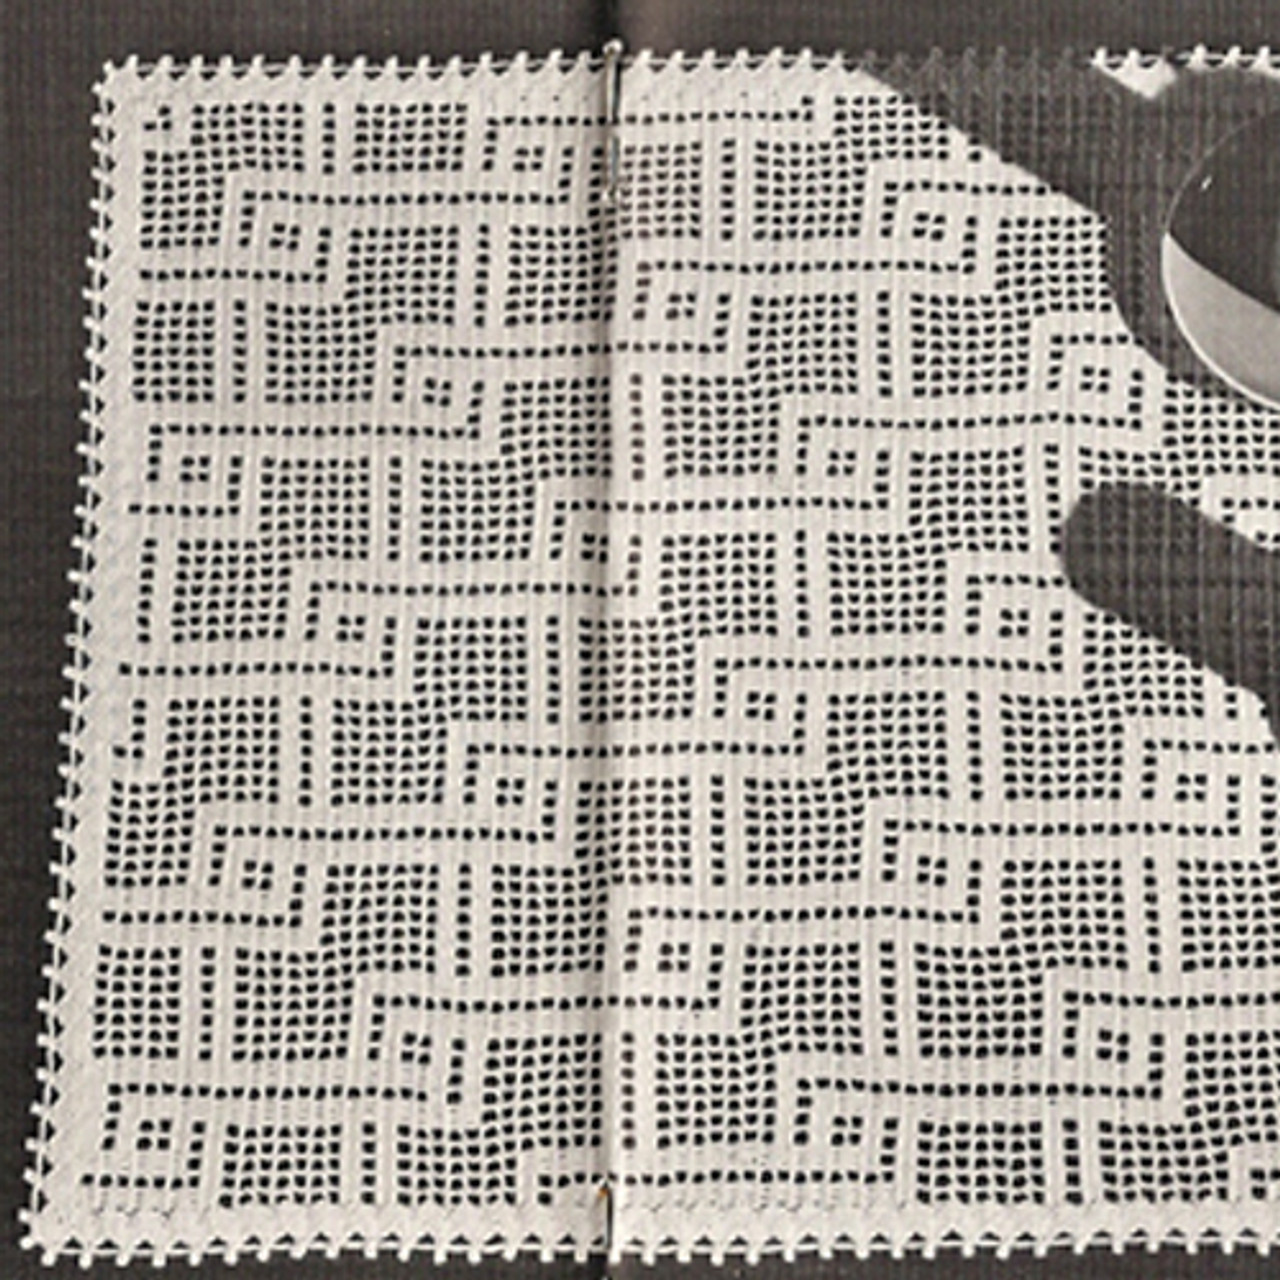 Crochet Linked Lines Place Mats Pattern